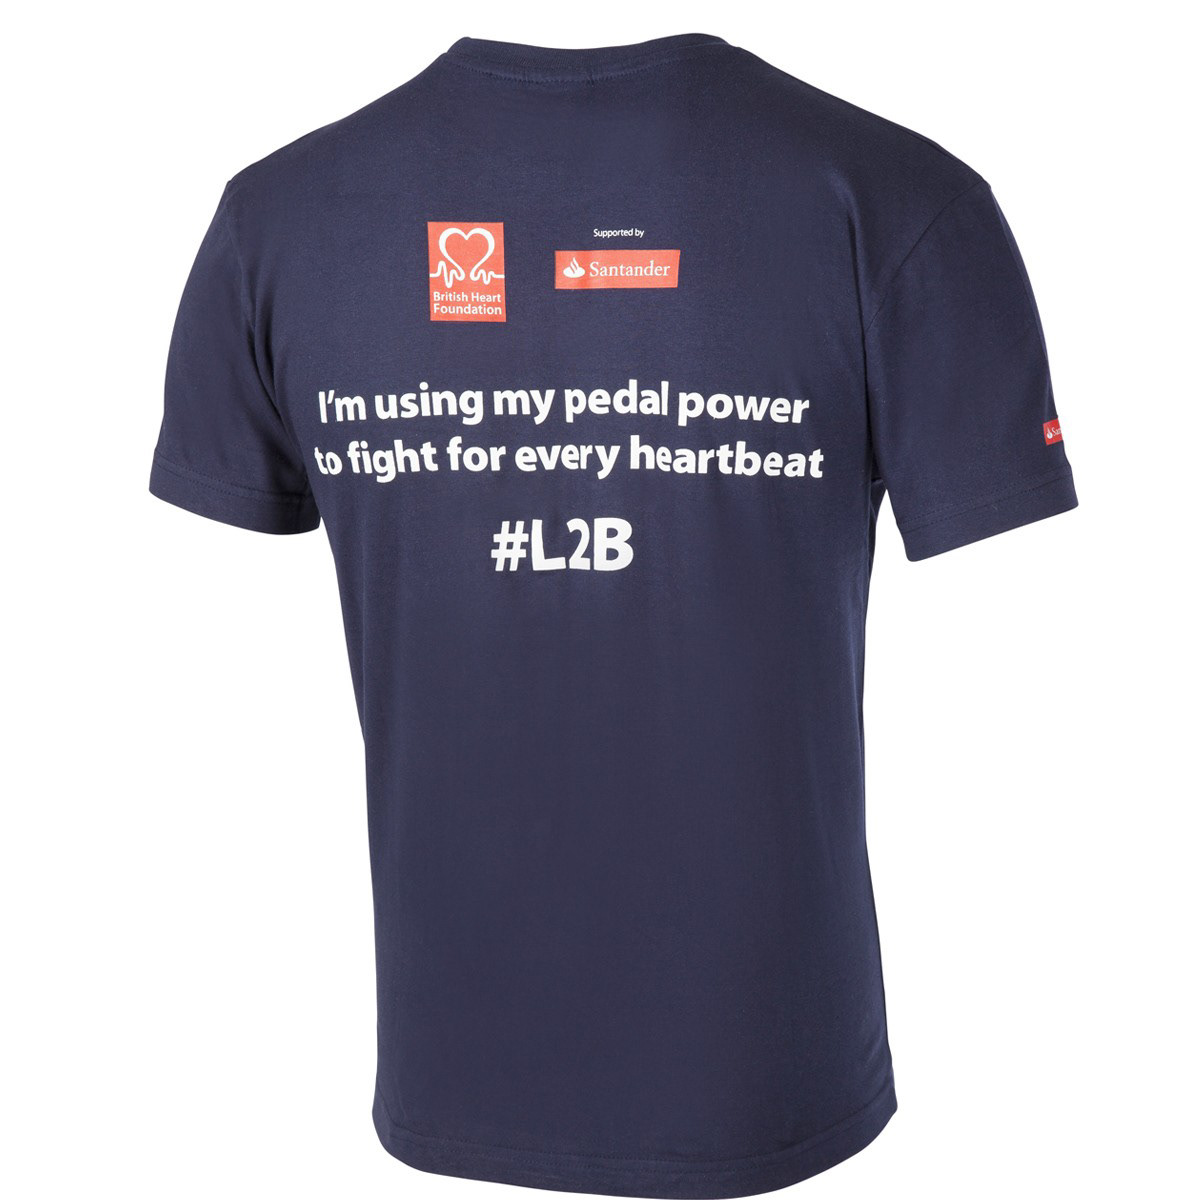 bhf  british heart foundation  Tshirt  t-shirt  red  wheel  cycle  bike  charity  event  Merchandise